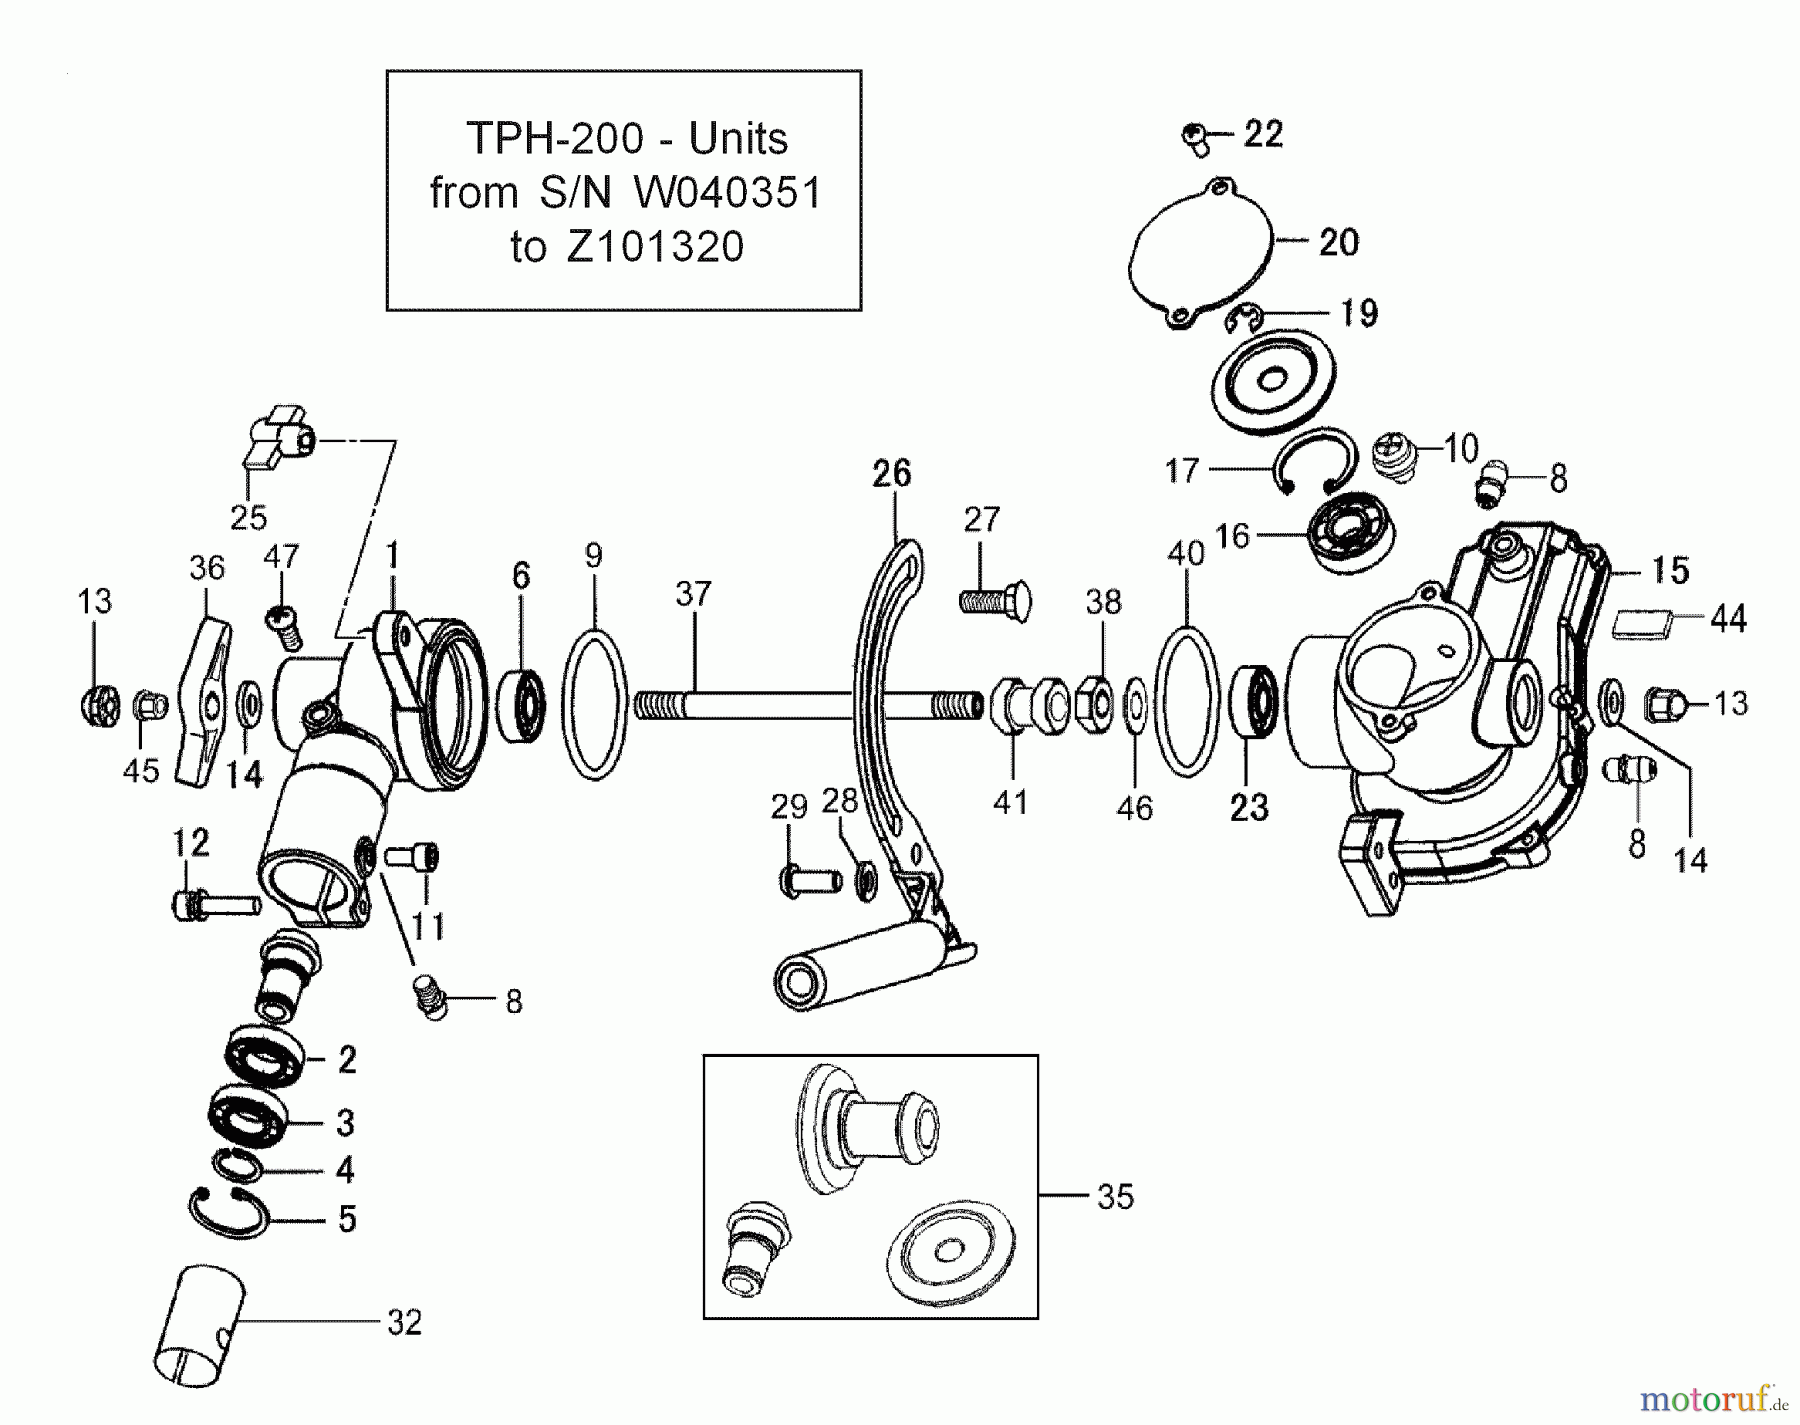  Tanaka Zubehör TPH-200 - Tanaka Articulating Hedgetrimmer Attachment Gear Case, Adjusting Handle, Gears (S/N W040351 to Z101320)